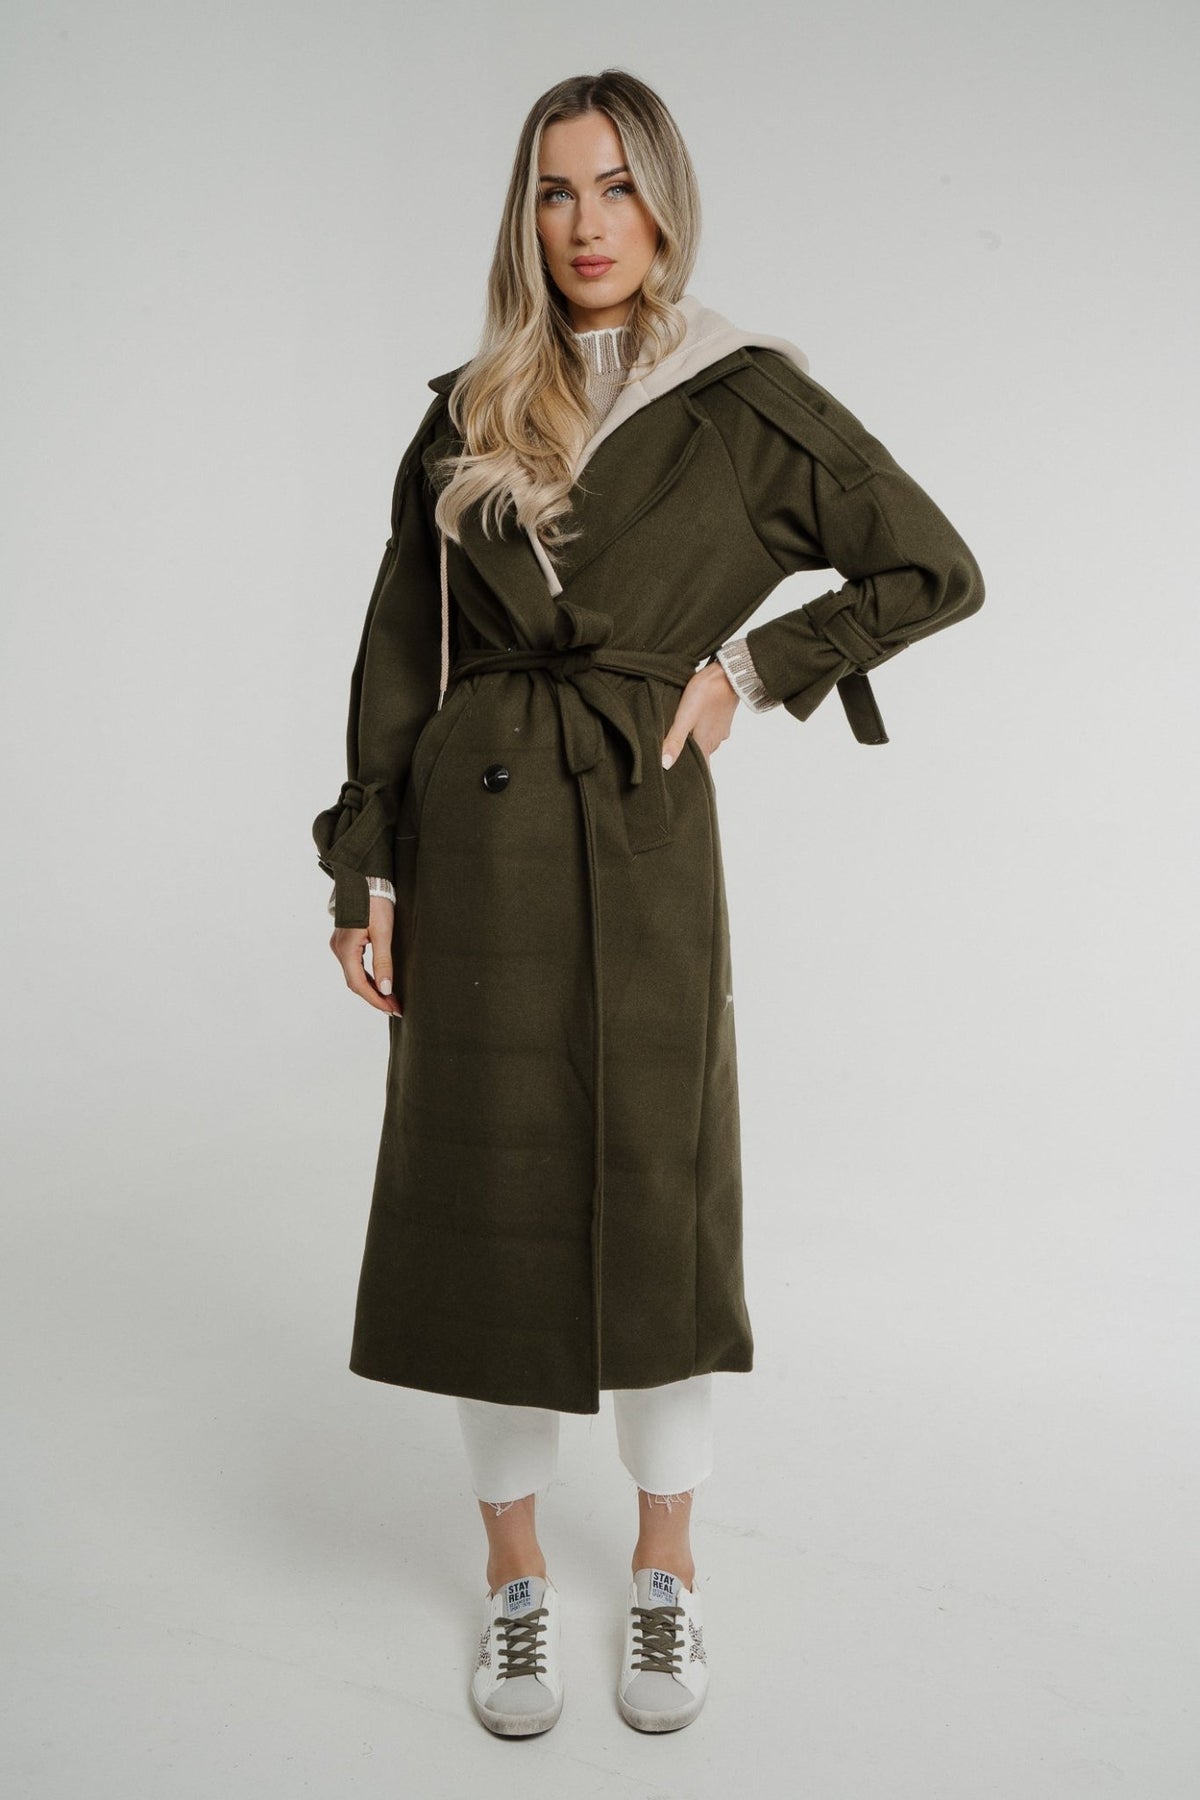 Kelly Layered Hooded Coat In Khaki - The Walk in Wardrobe